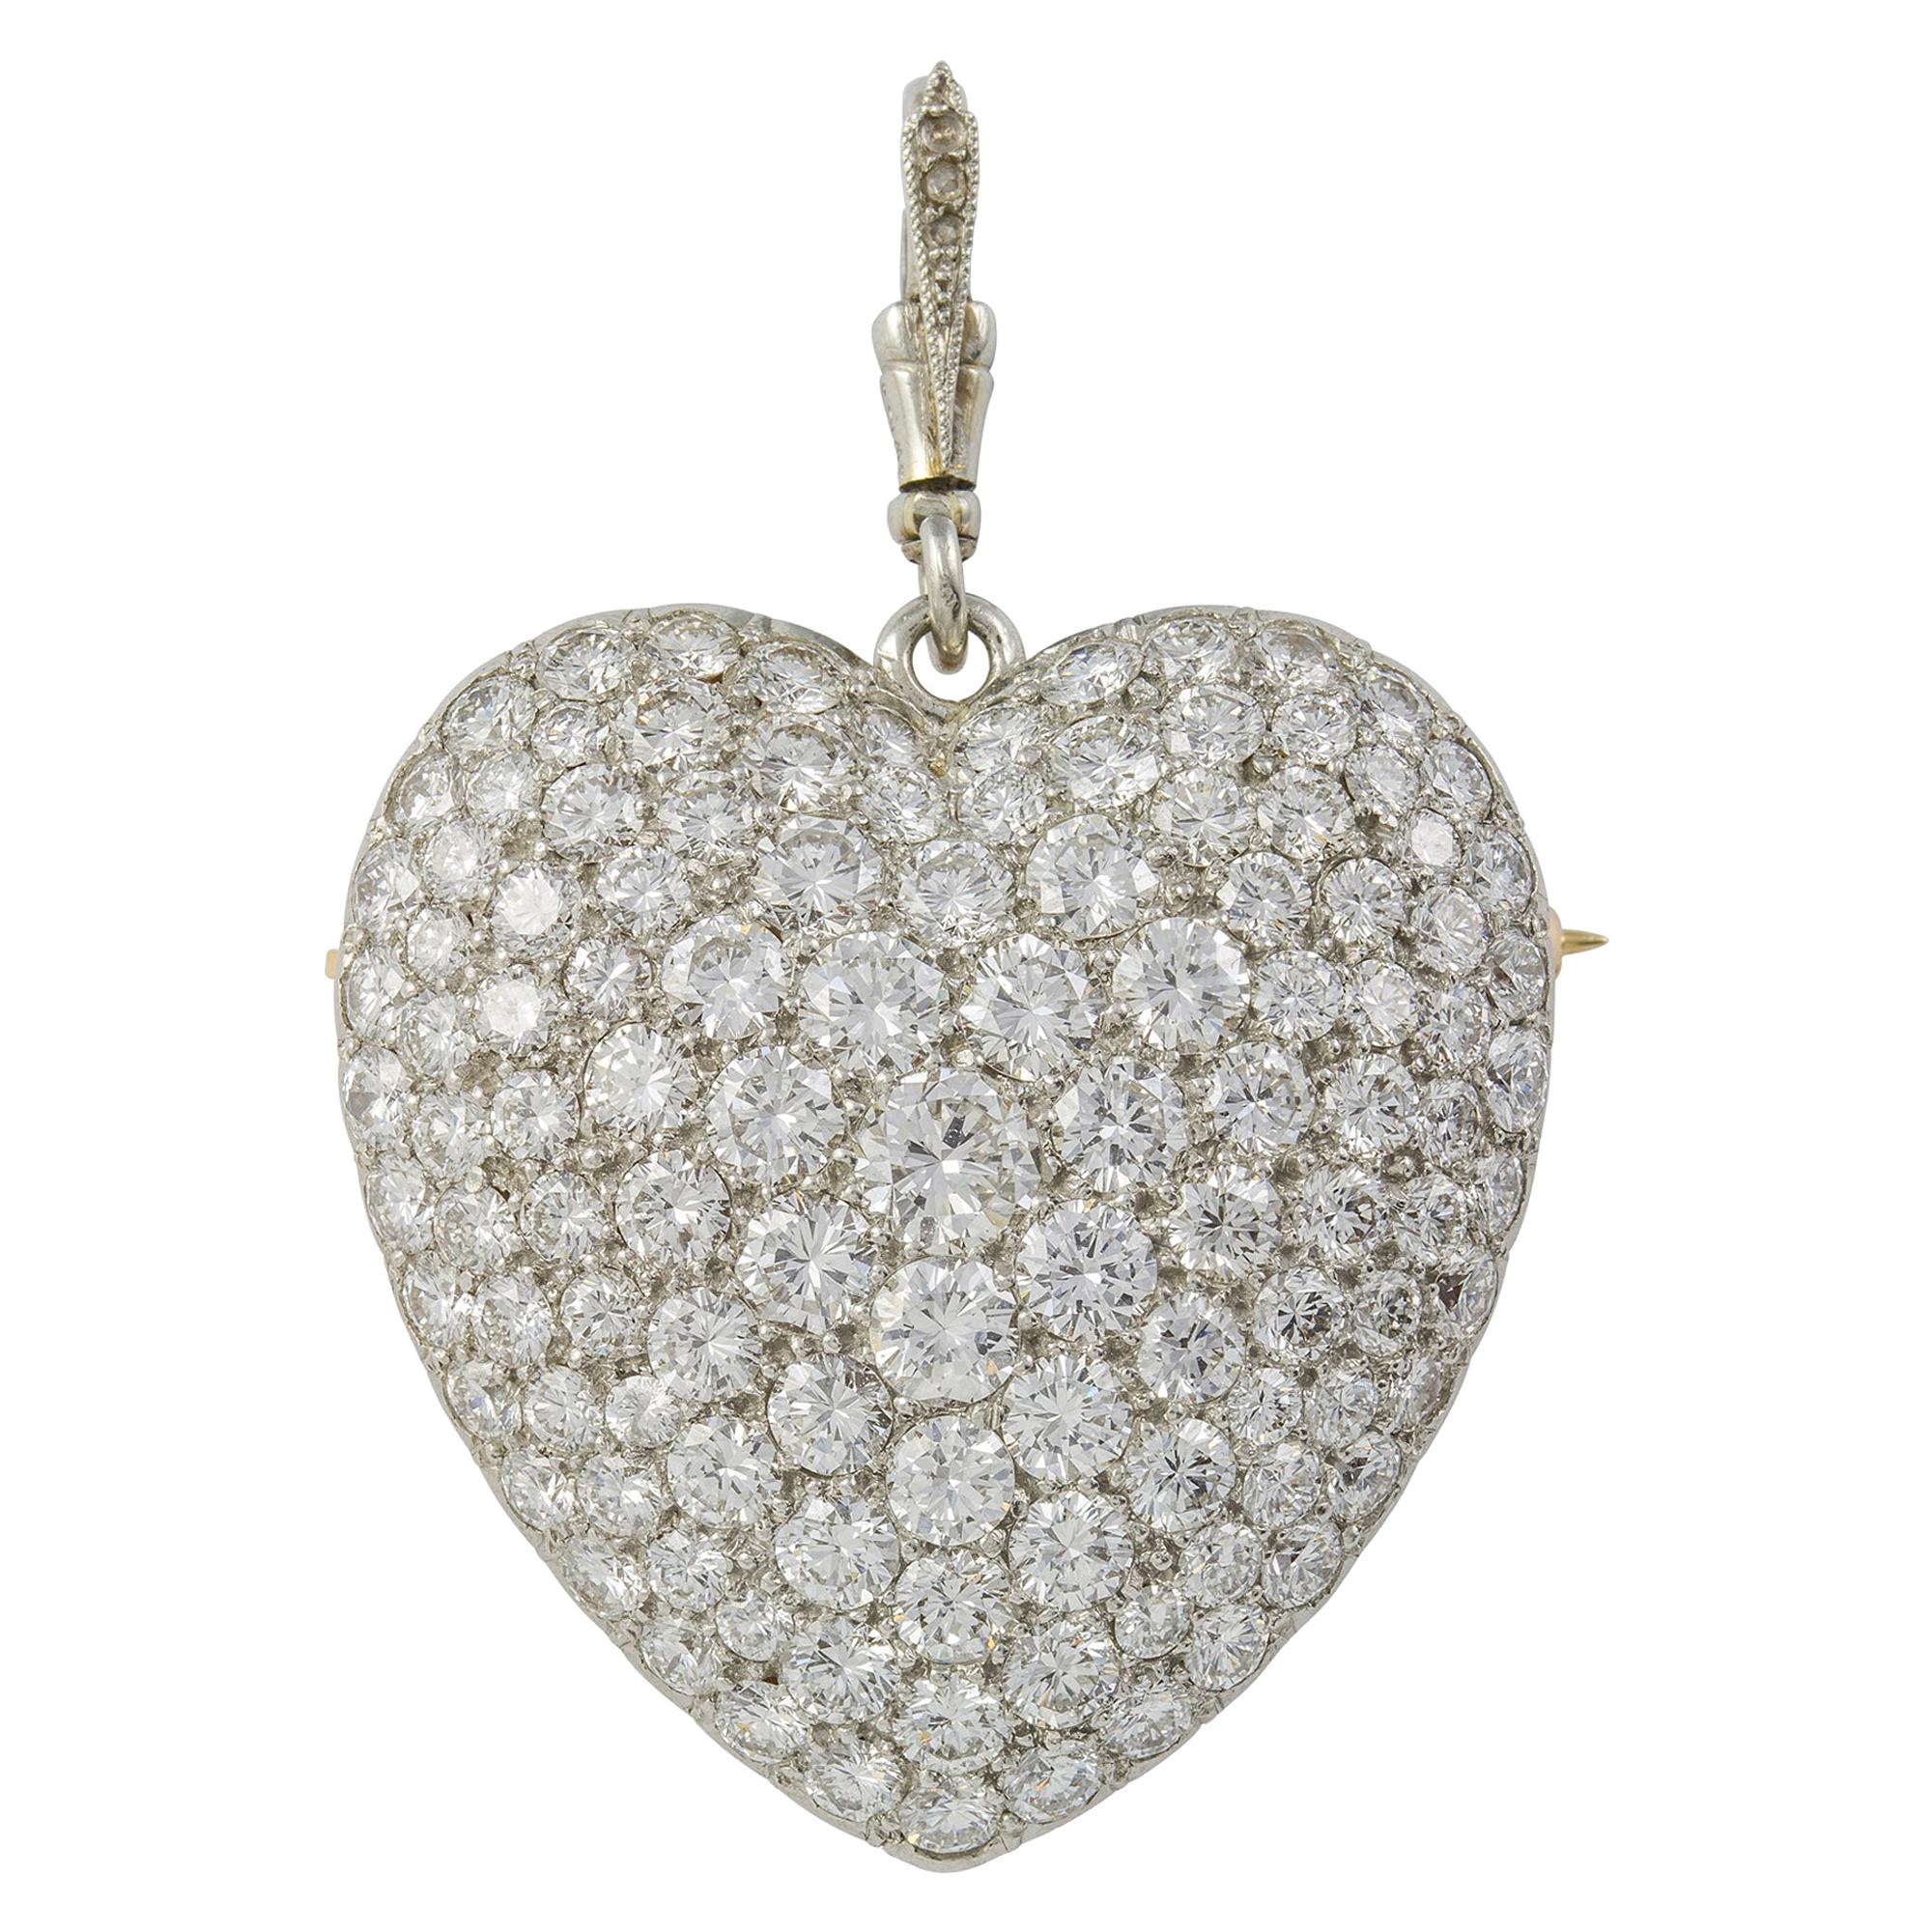 Grand pendentif broche en forme de cœur serti de diamants pavés